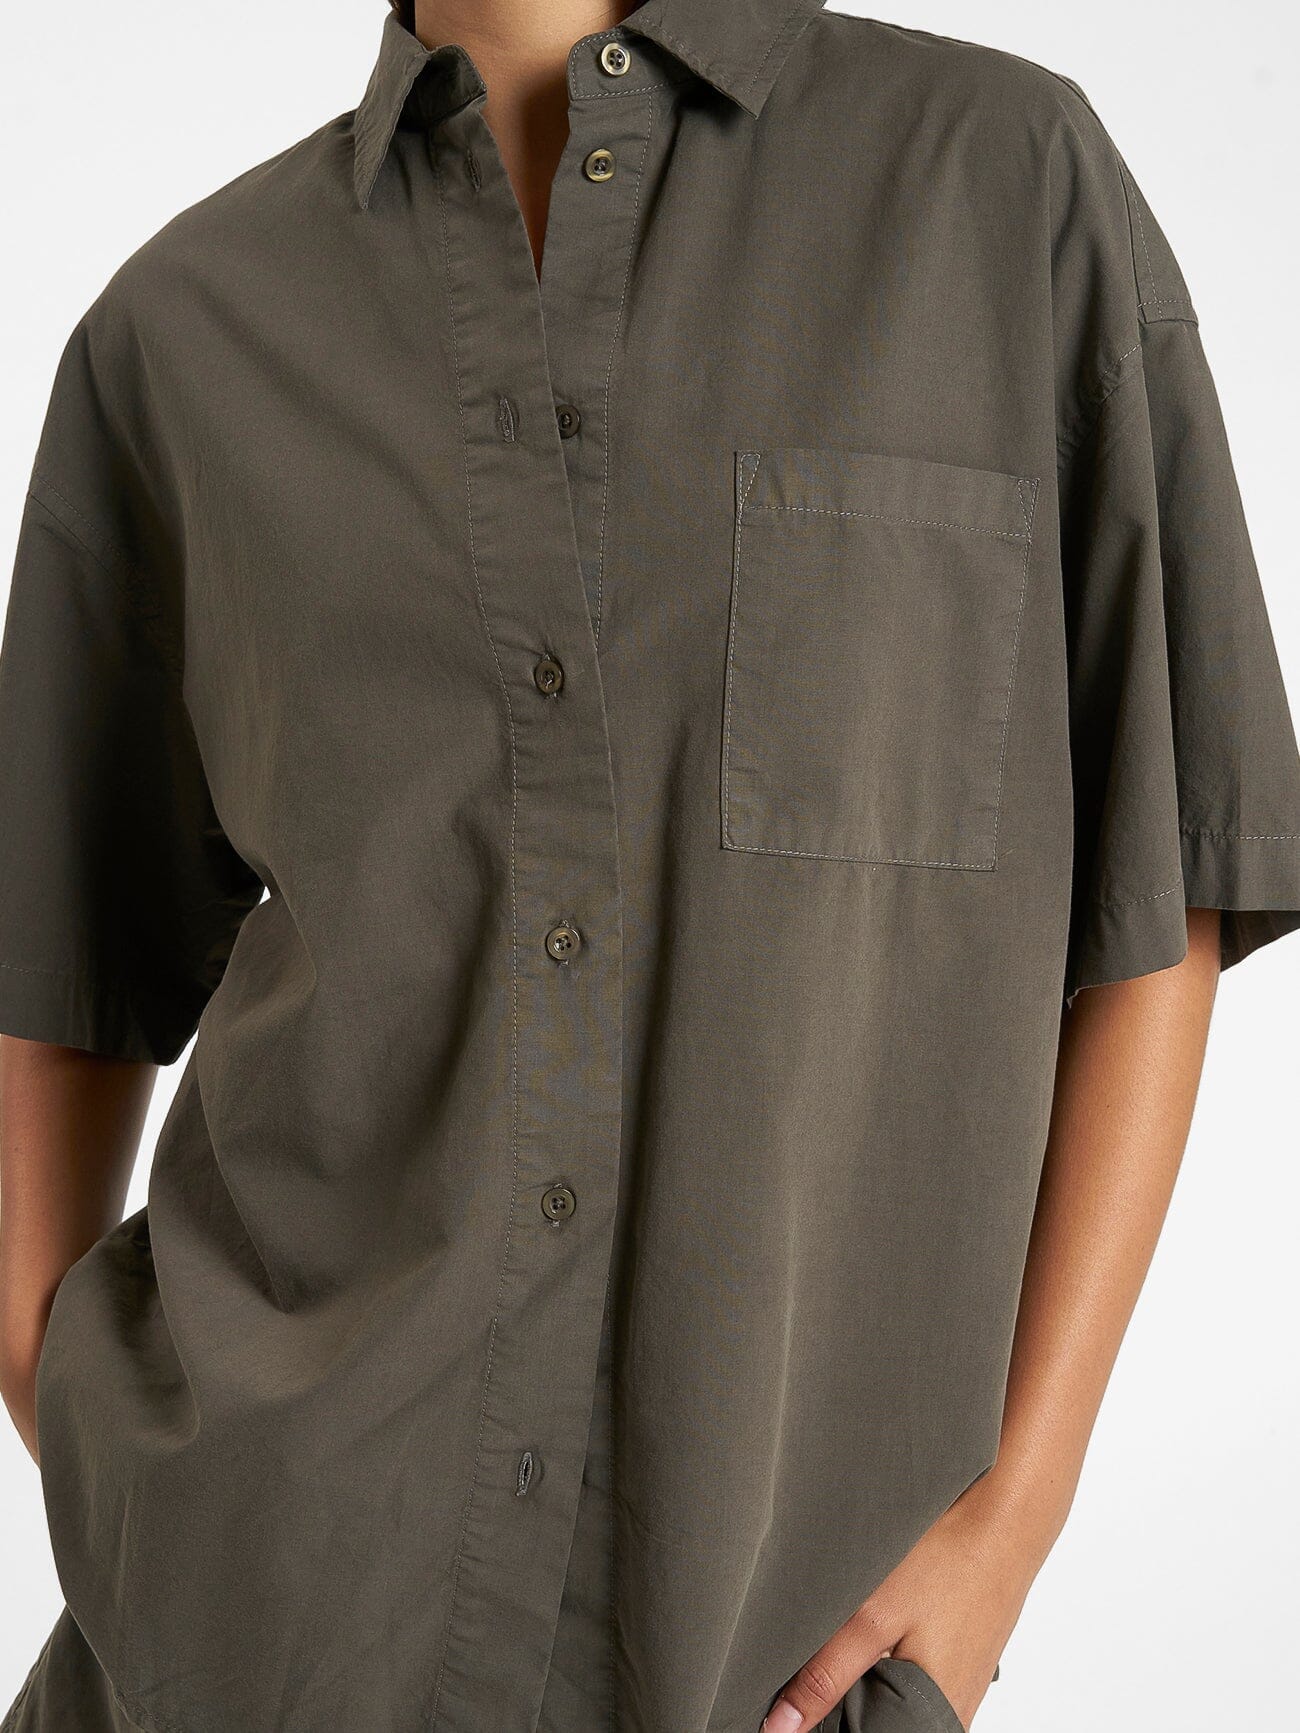 Leighton Short Sleeve Shirt - Tarmac